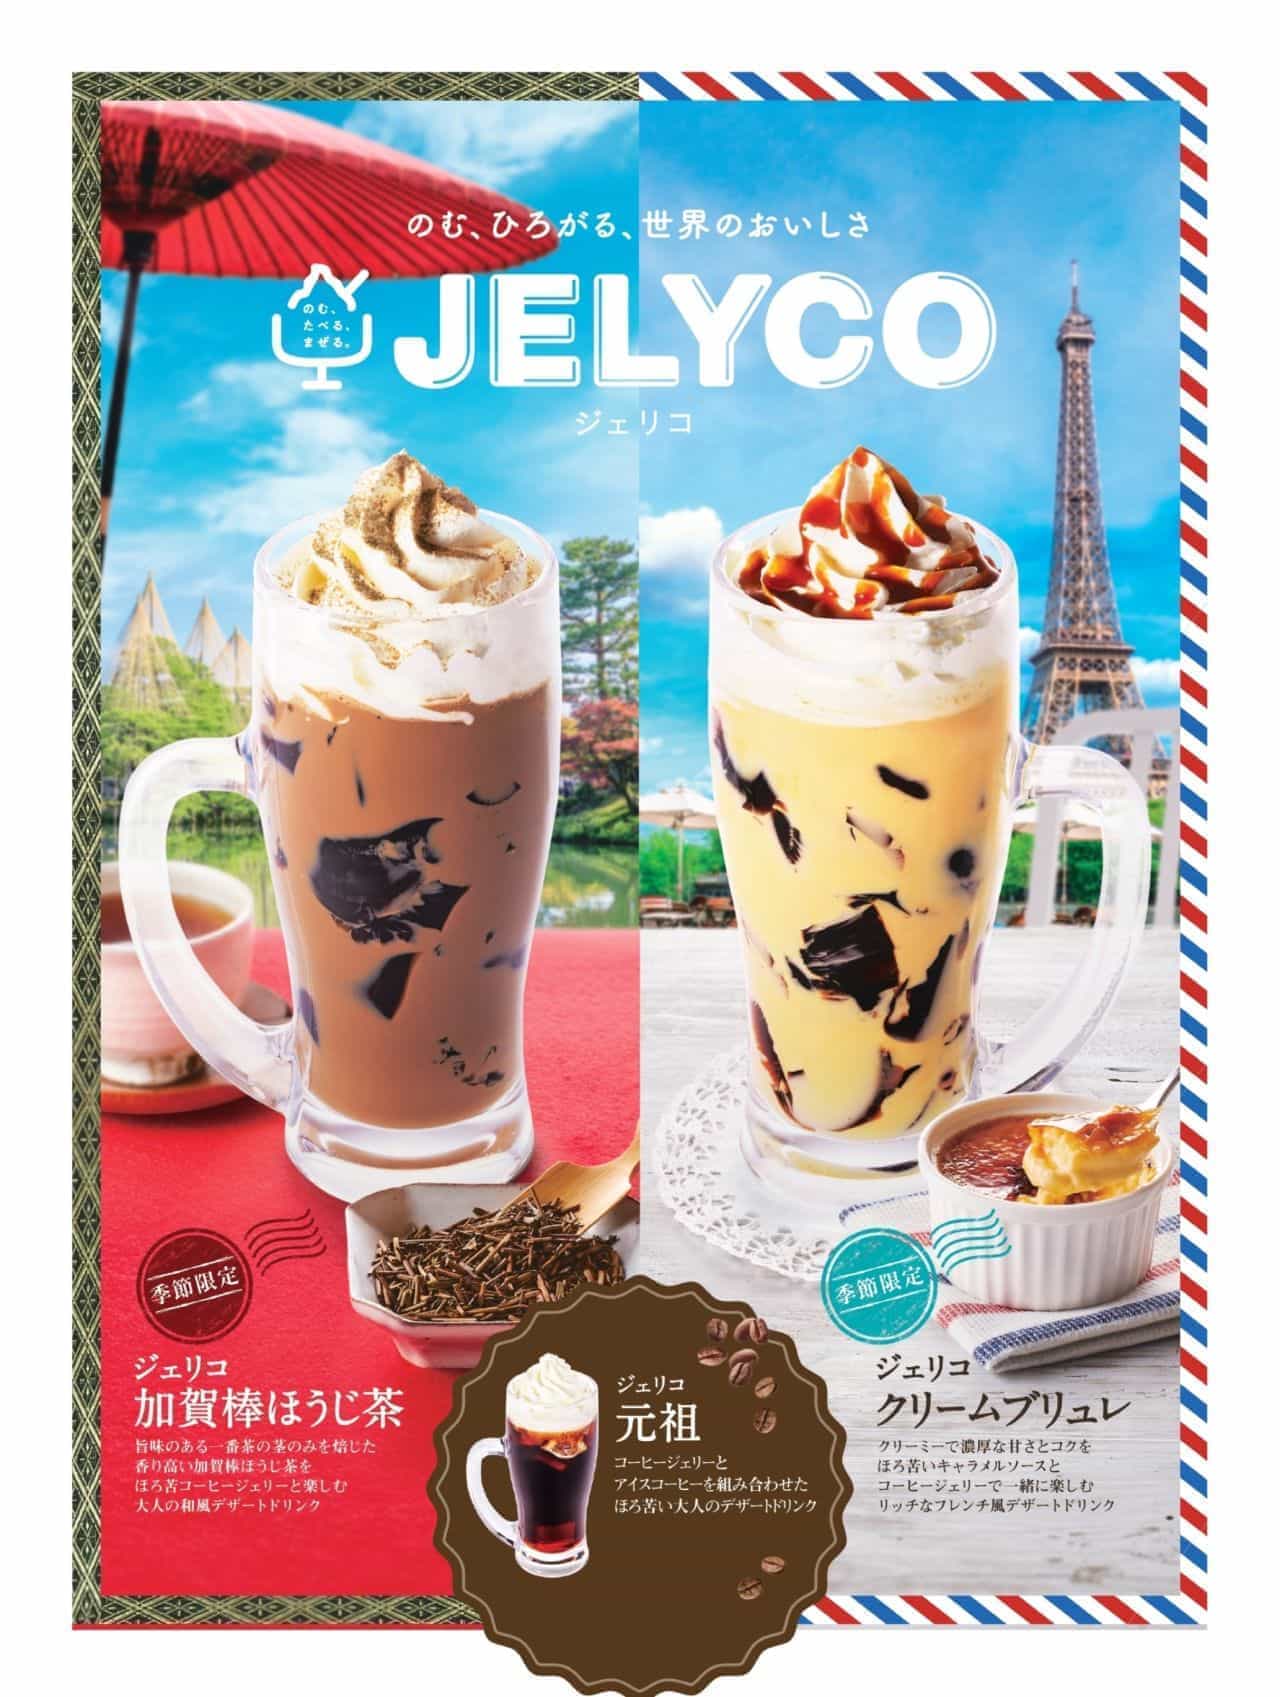 Komeda Coffee Shop "Jericho Kaga-bo Hojicha" and "Jericho Crème Brulee".